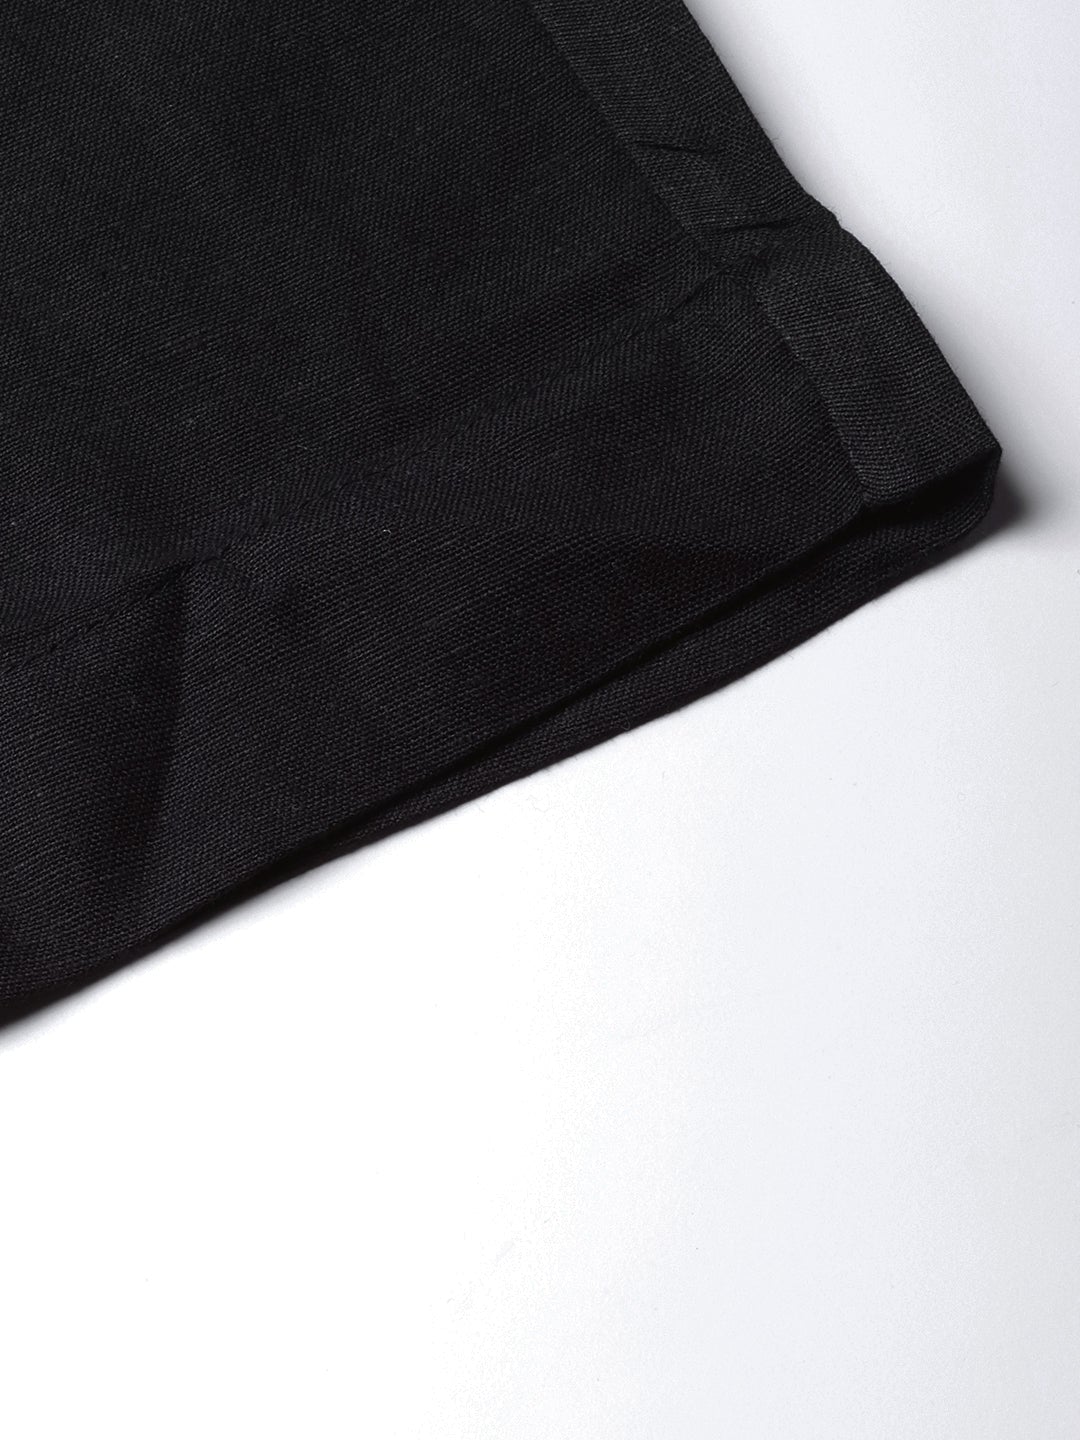 Black Rayon Solid Straight Pants